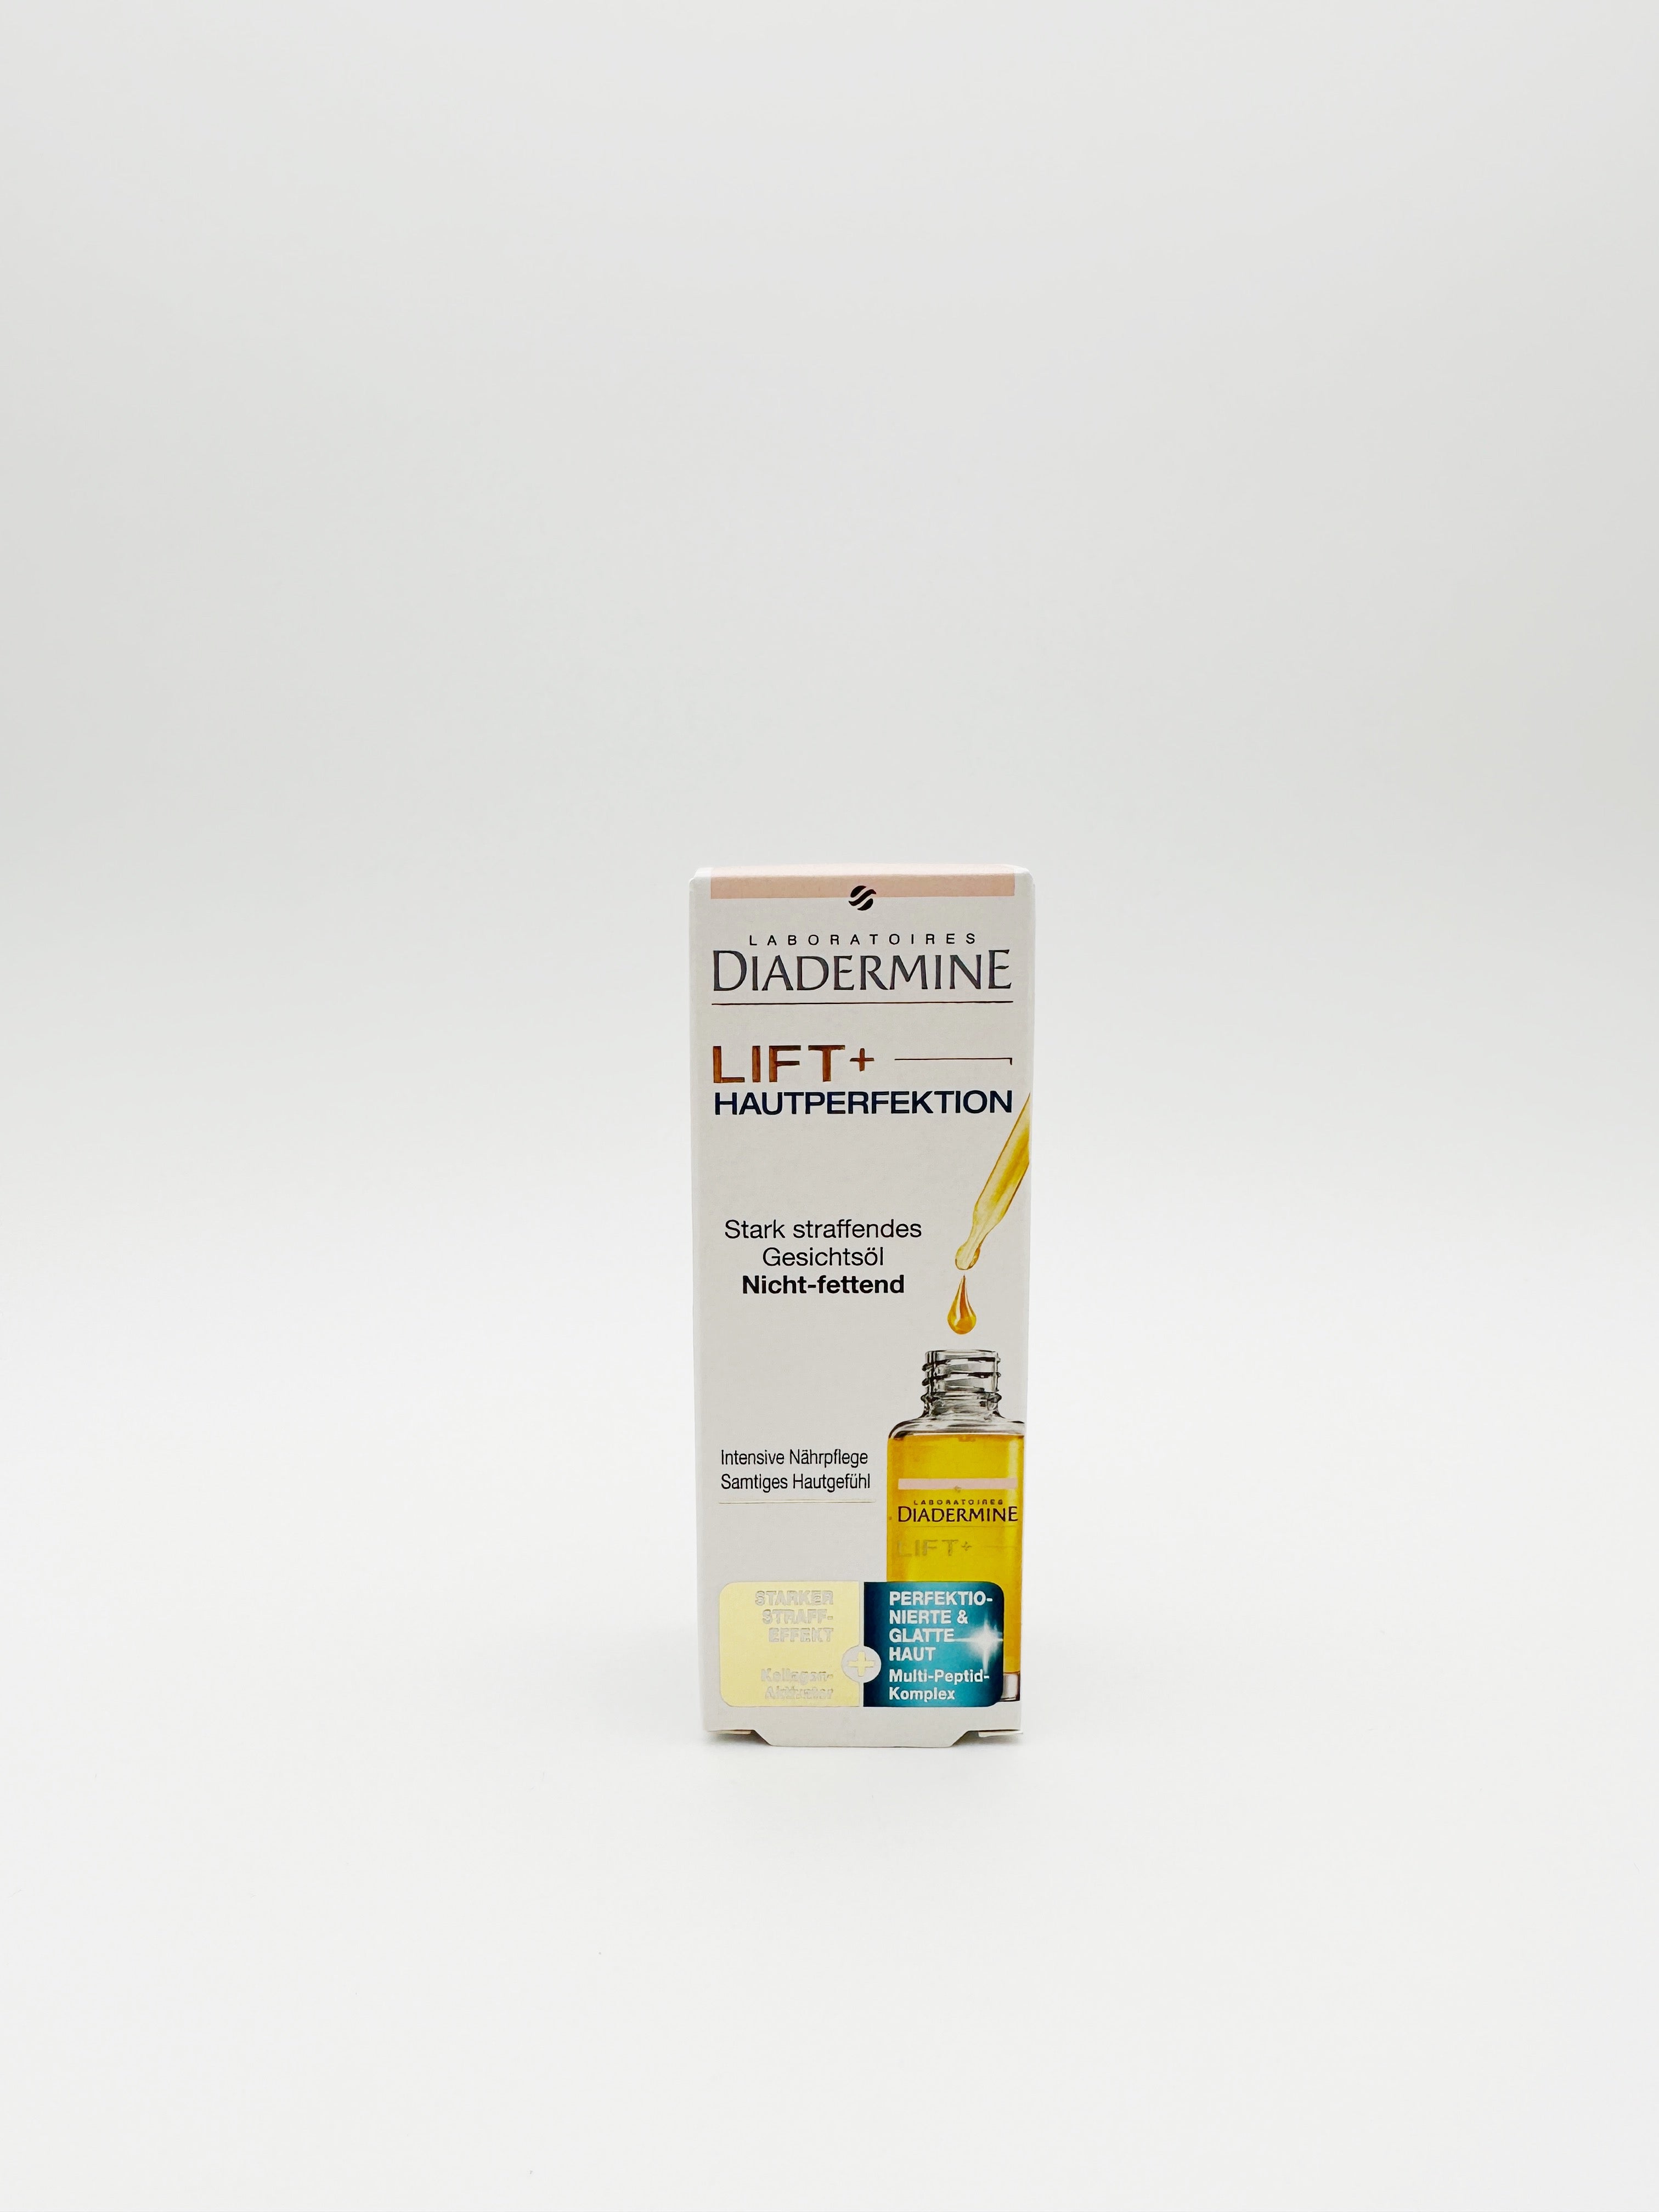 Diadermine Lift+ Hautperfektion Gesichtsöl 30ml